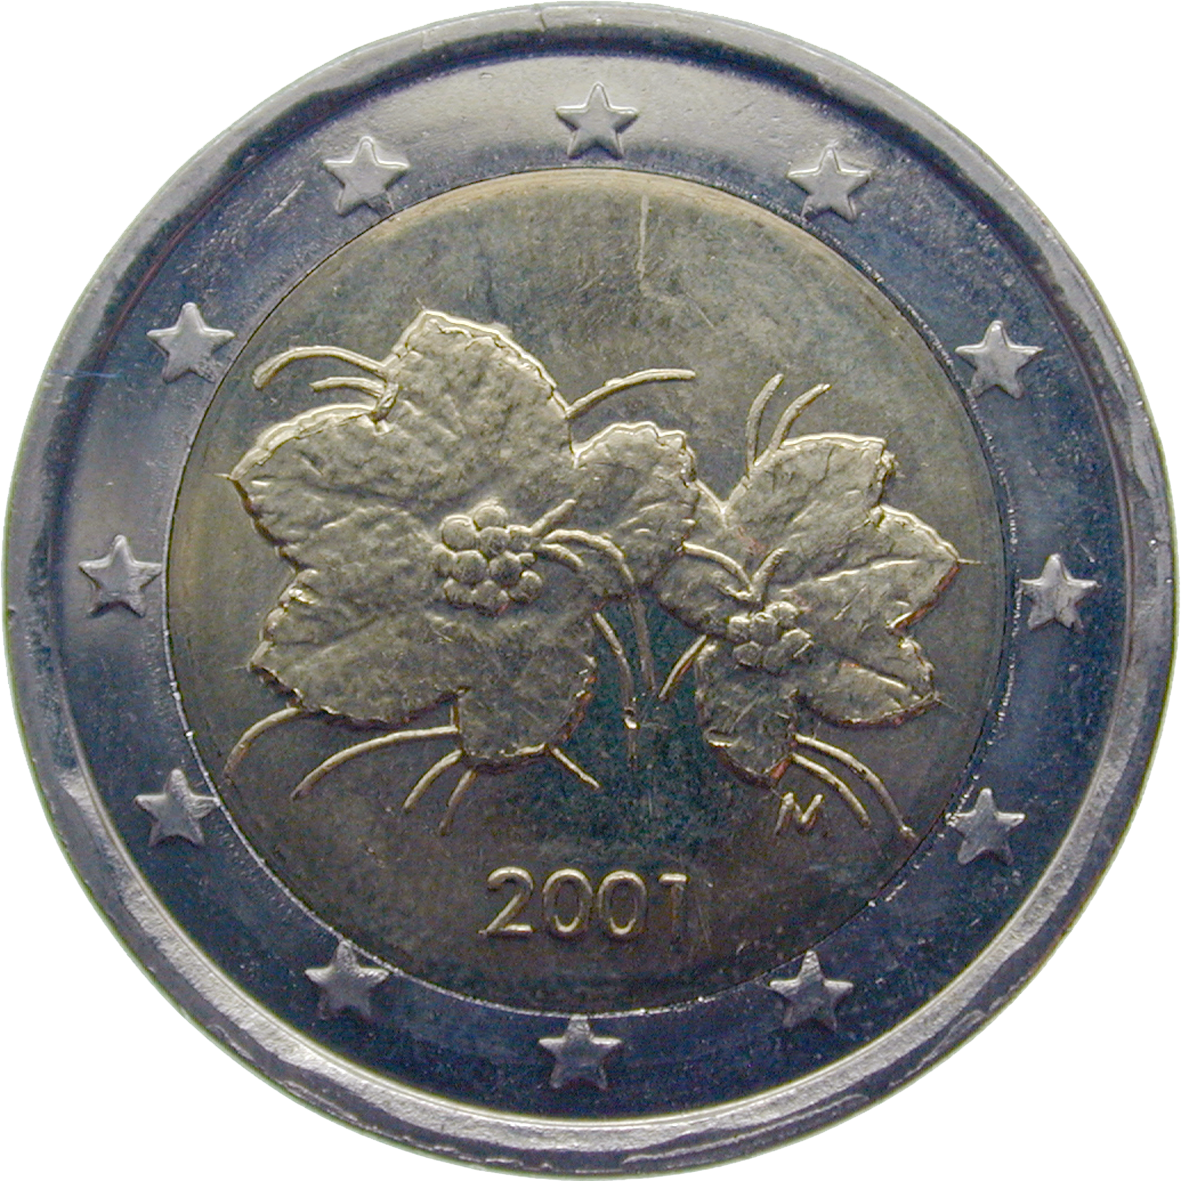 Republic of Finland, 2 Euro 2001 (reverse)